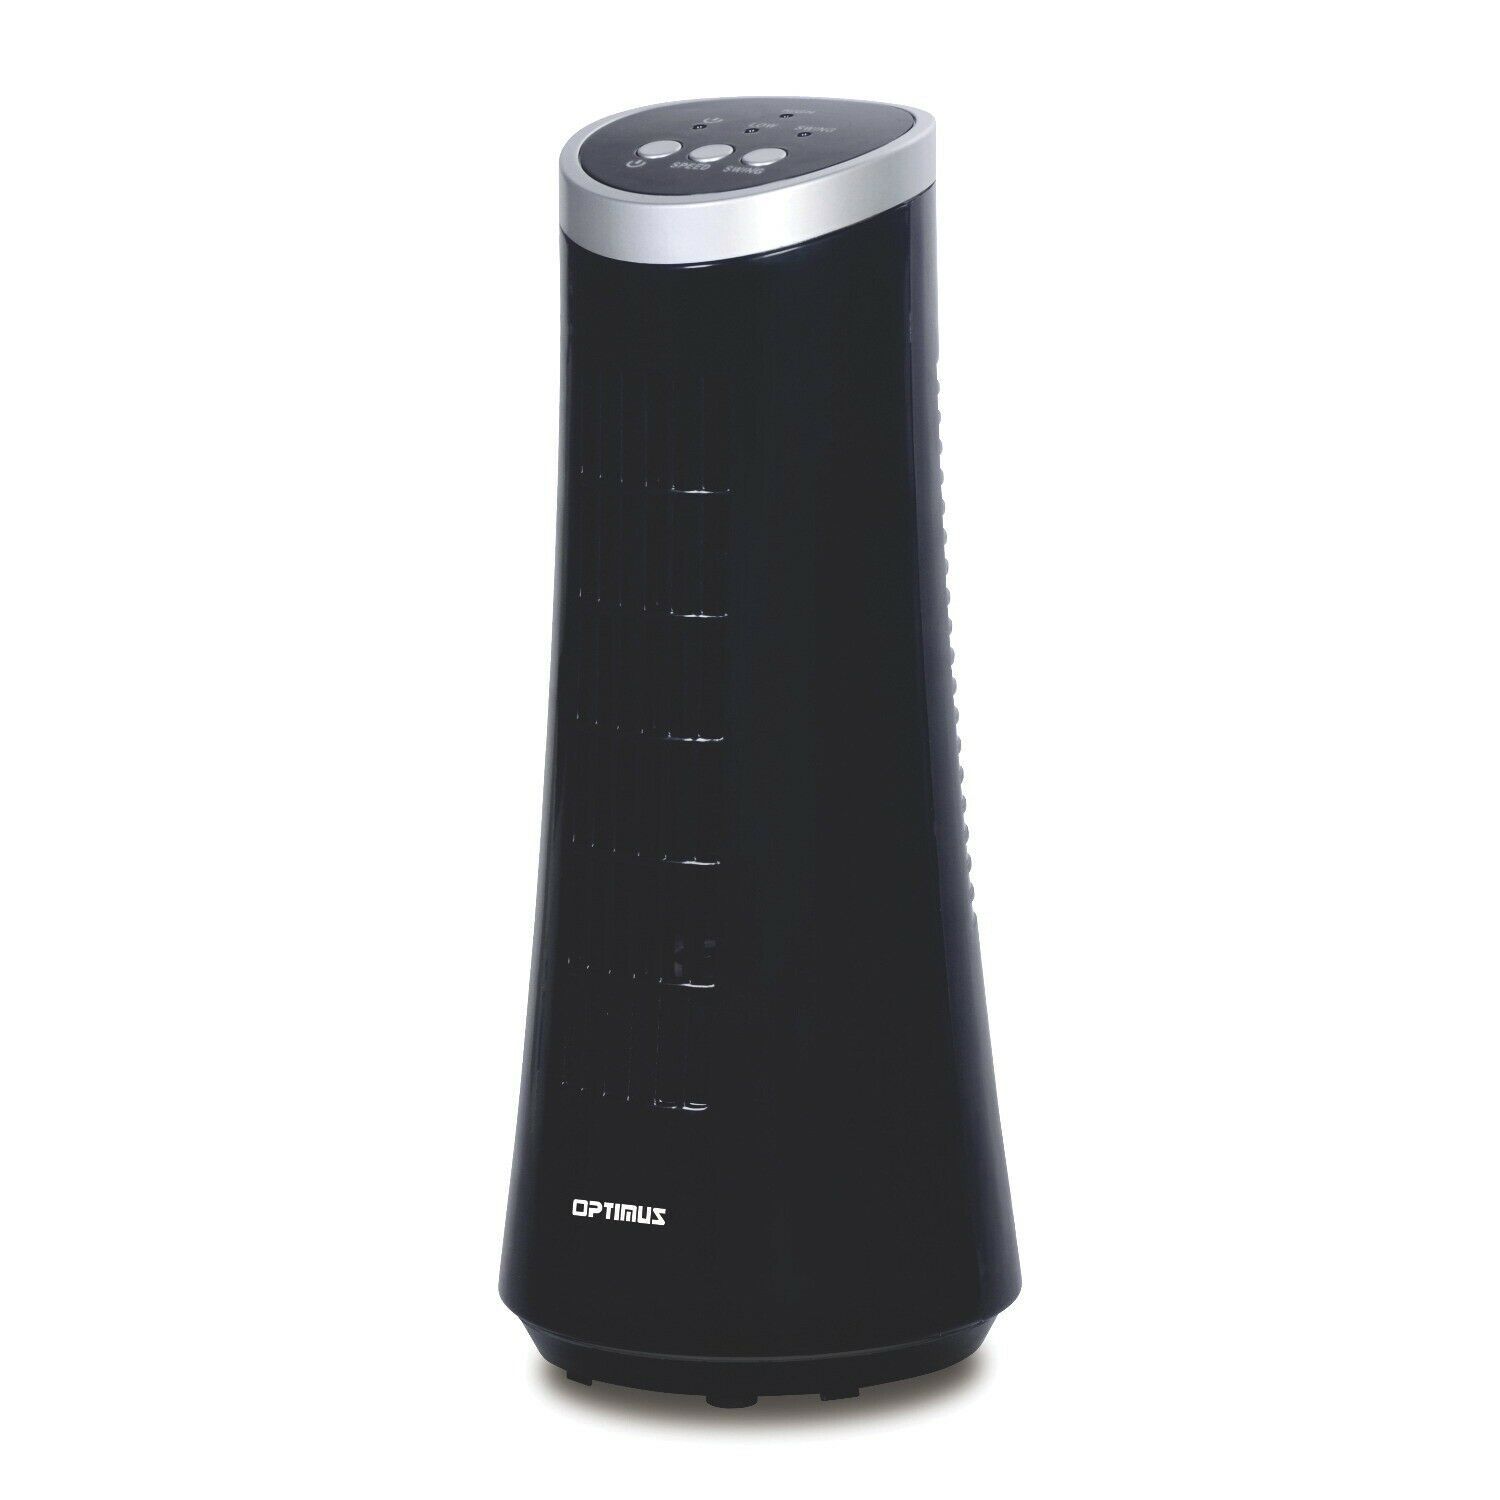 12" Desktop Ultraslim Oscillating Tower Fan (Black) - $29.00